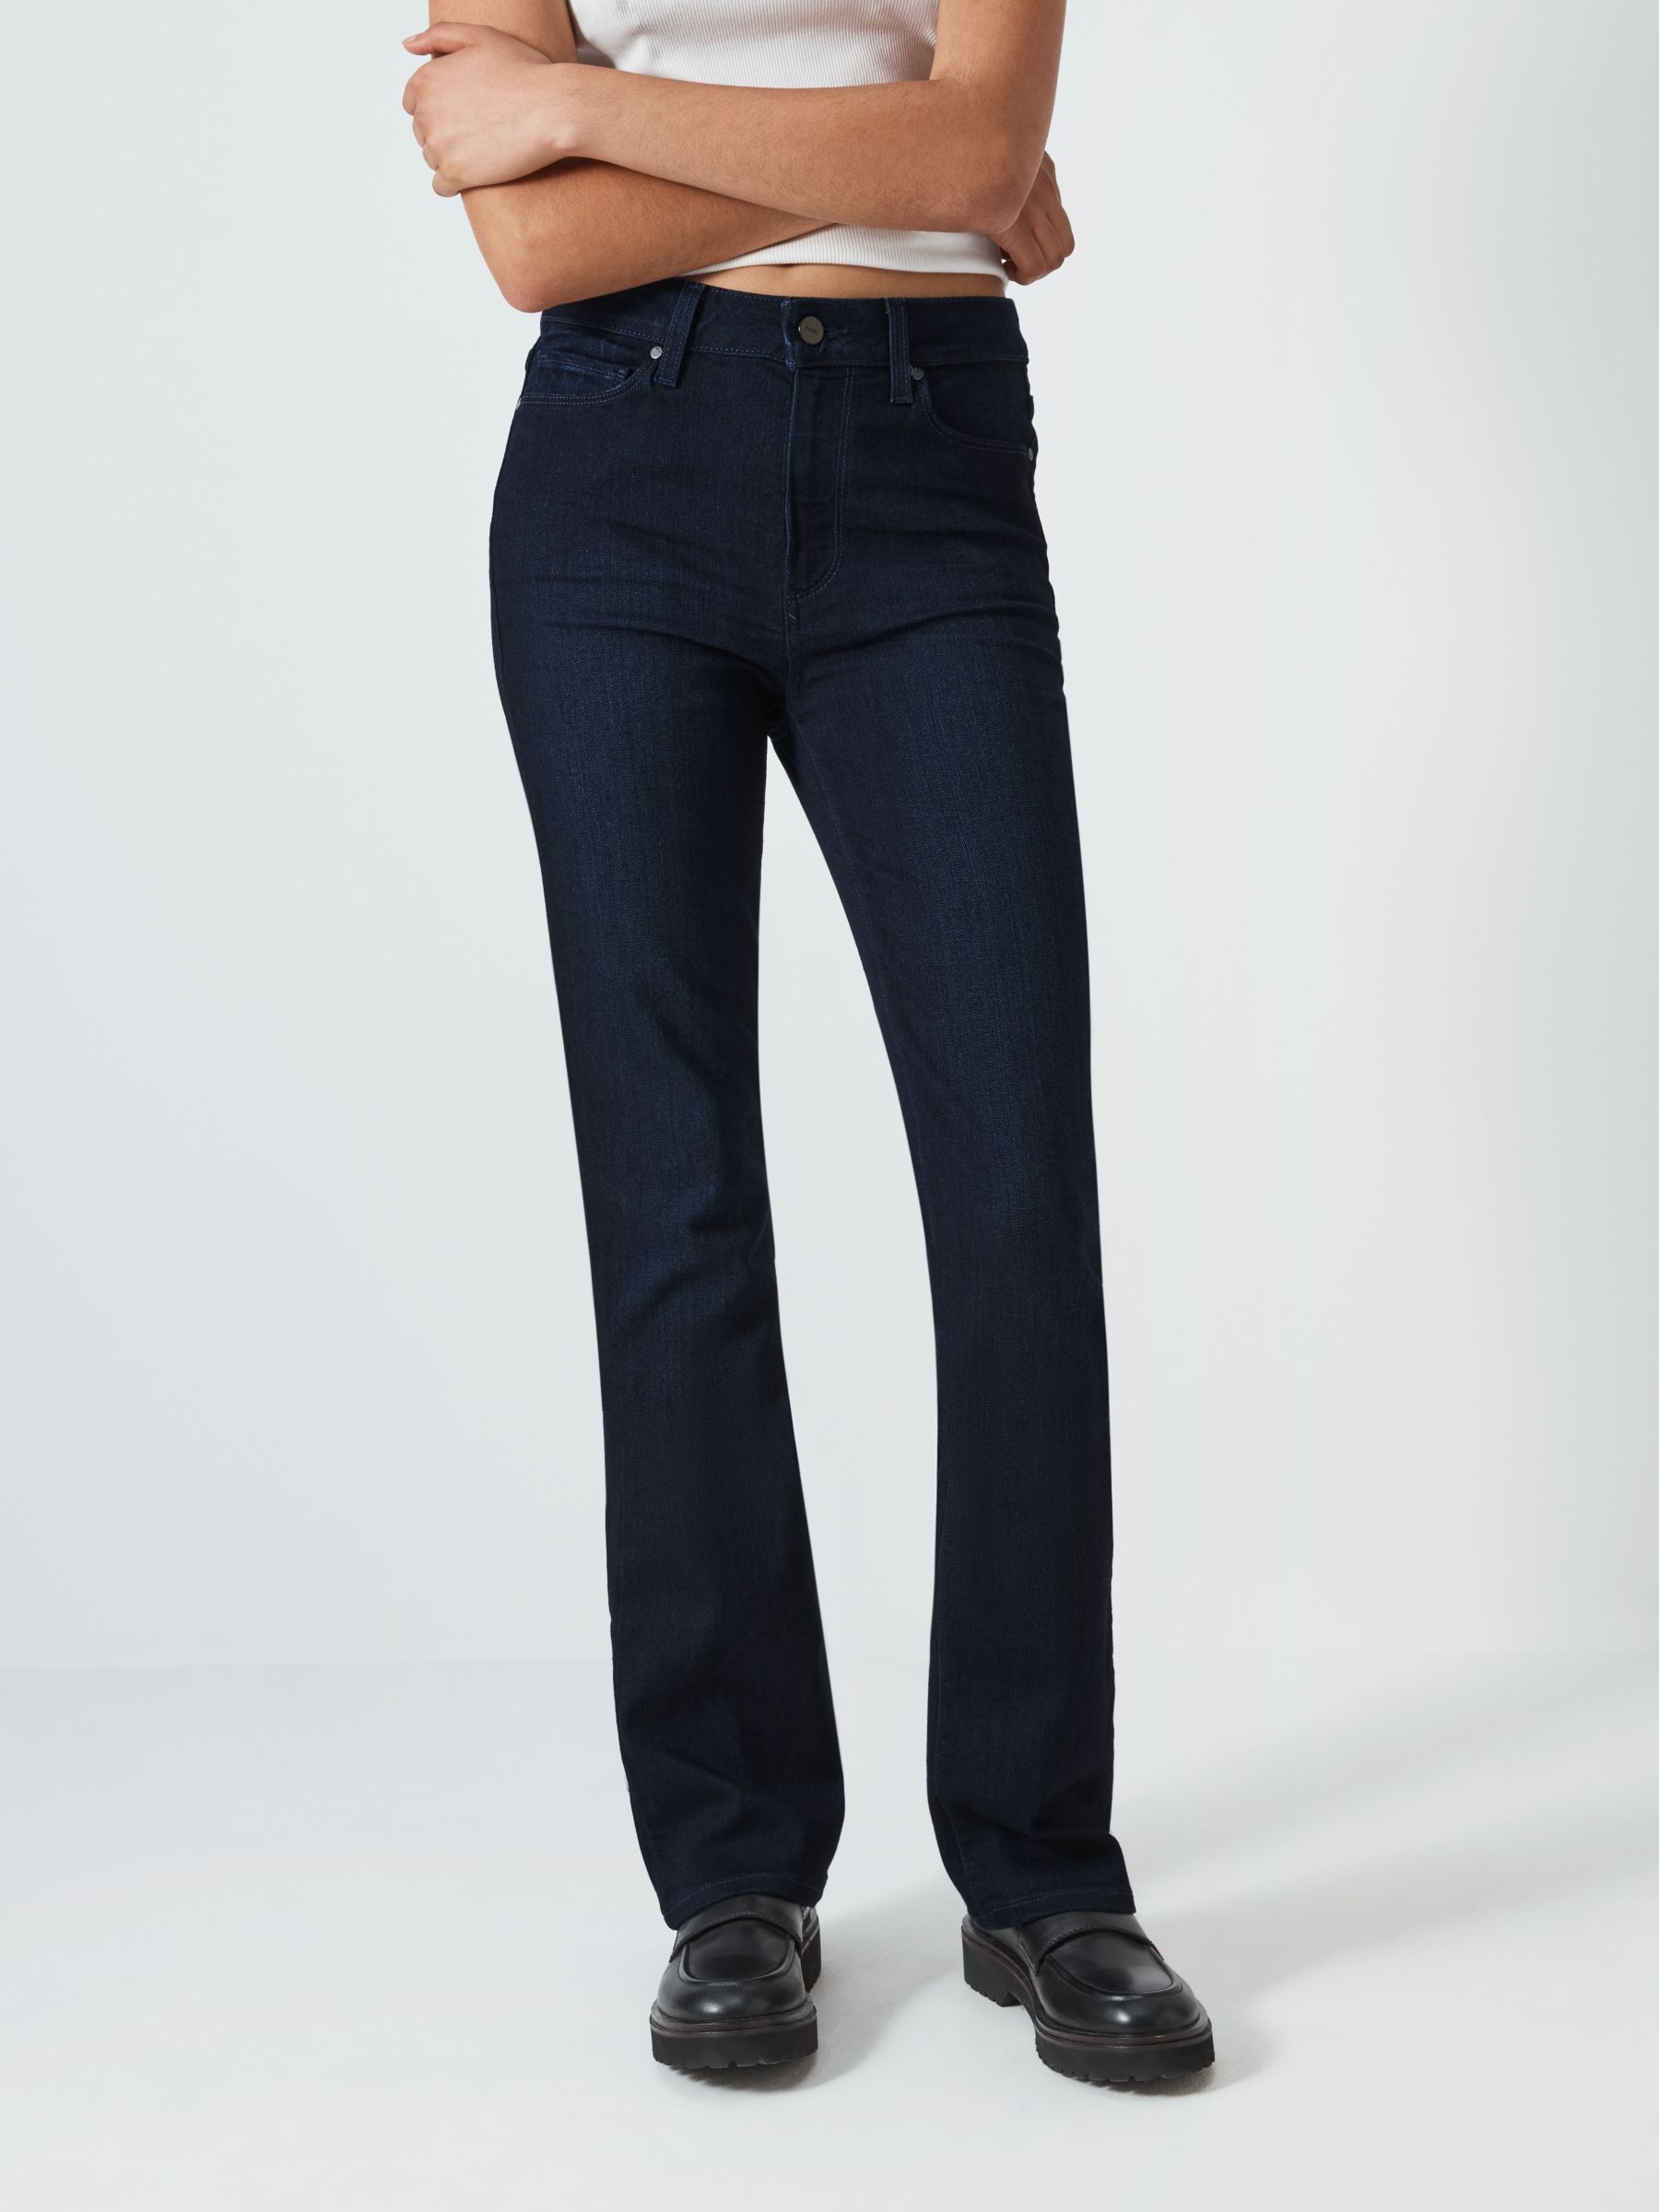 PAIGE High Rise Manhattan Bootcut Jeans, Lana at John Lewis & Partners